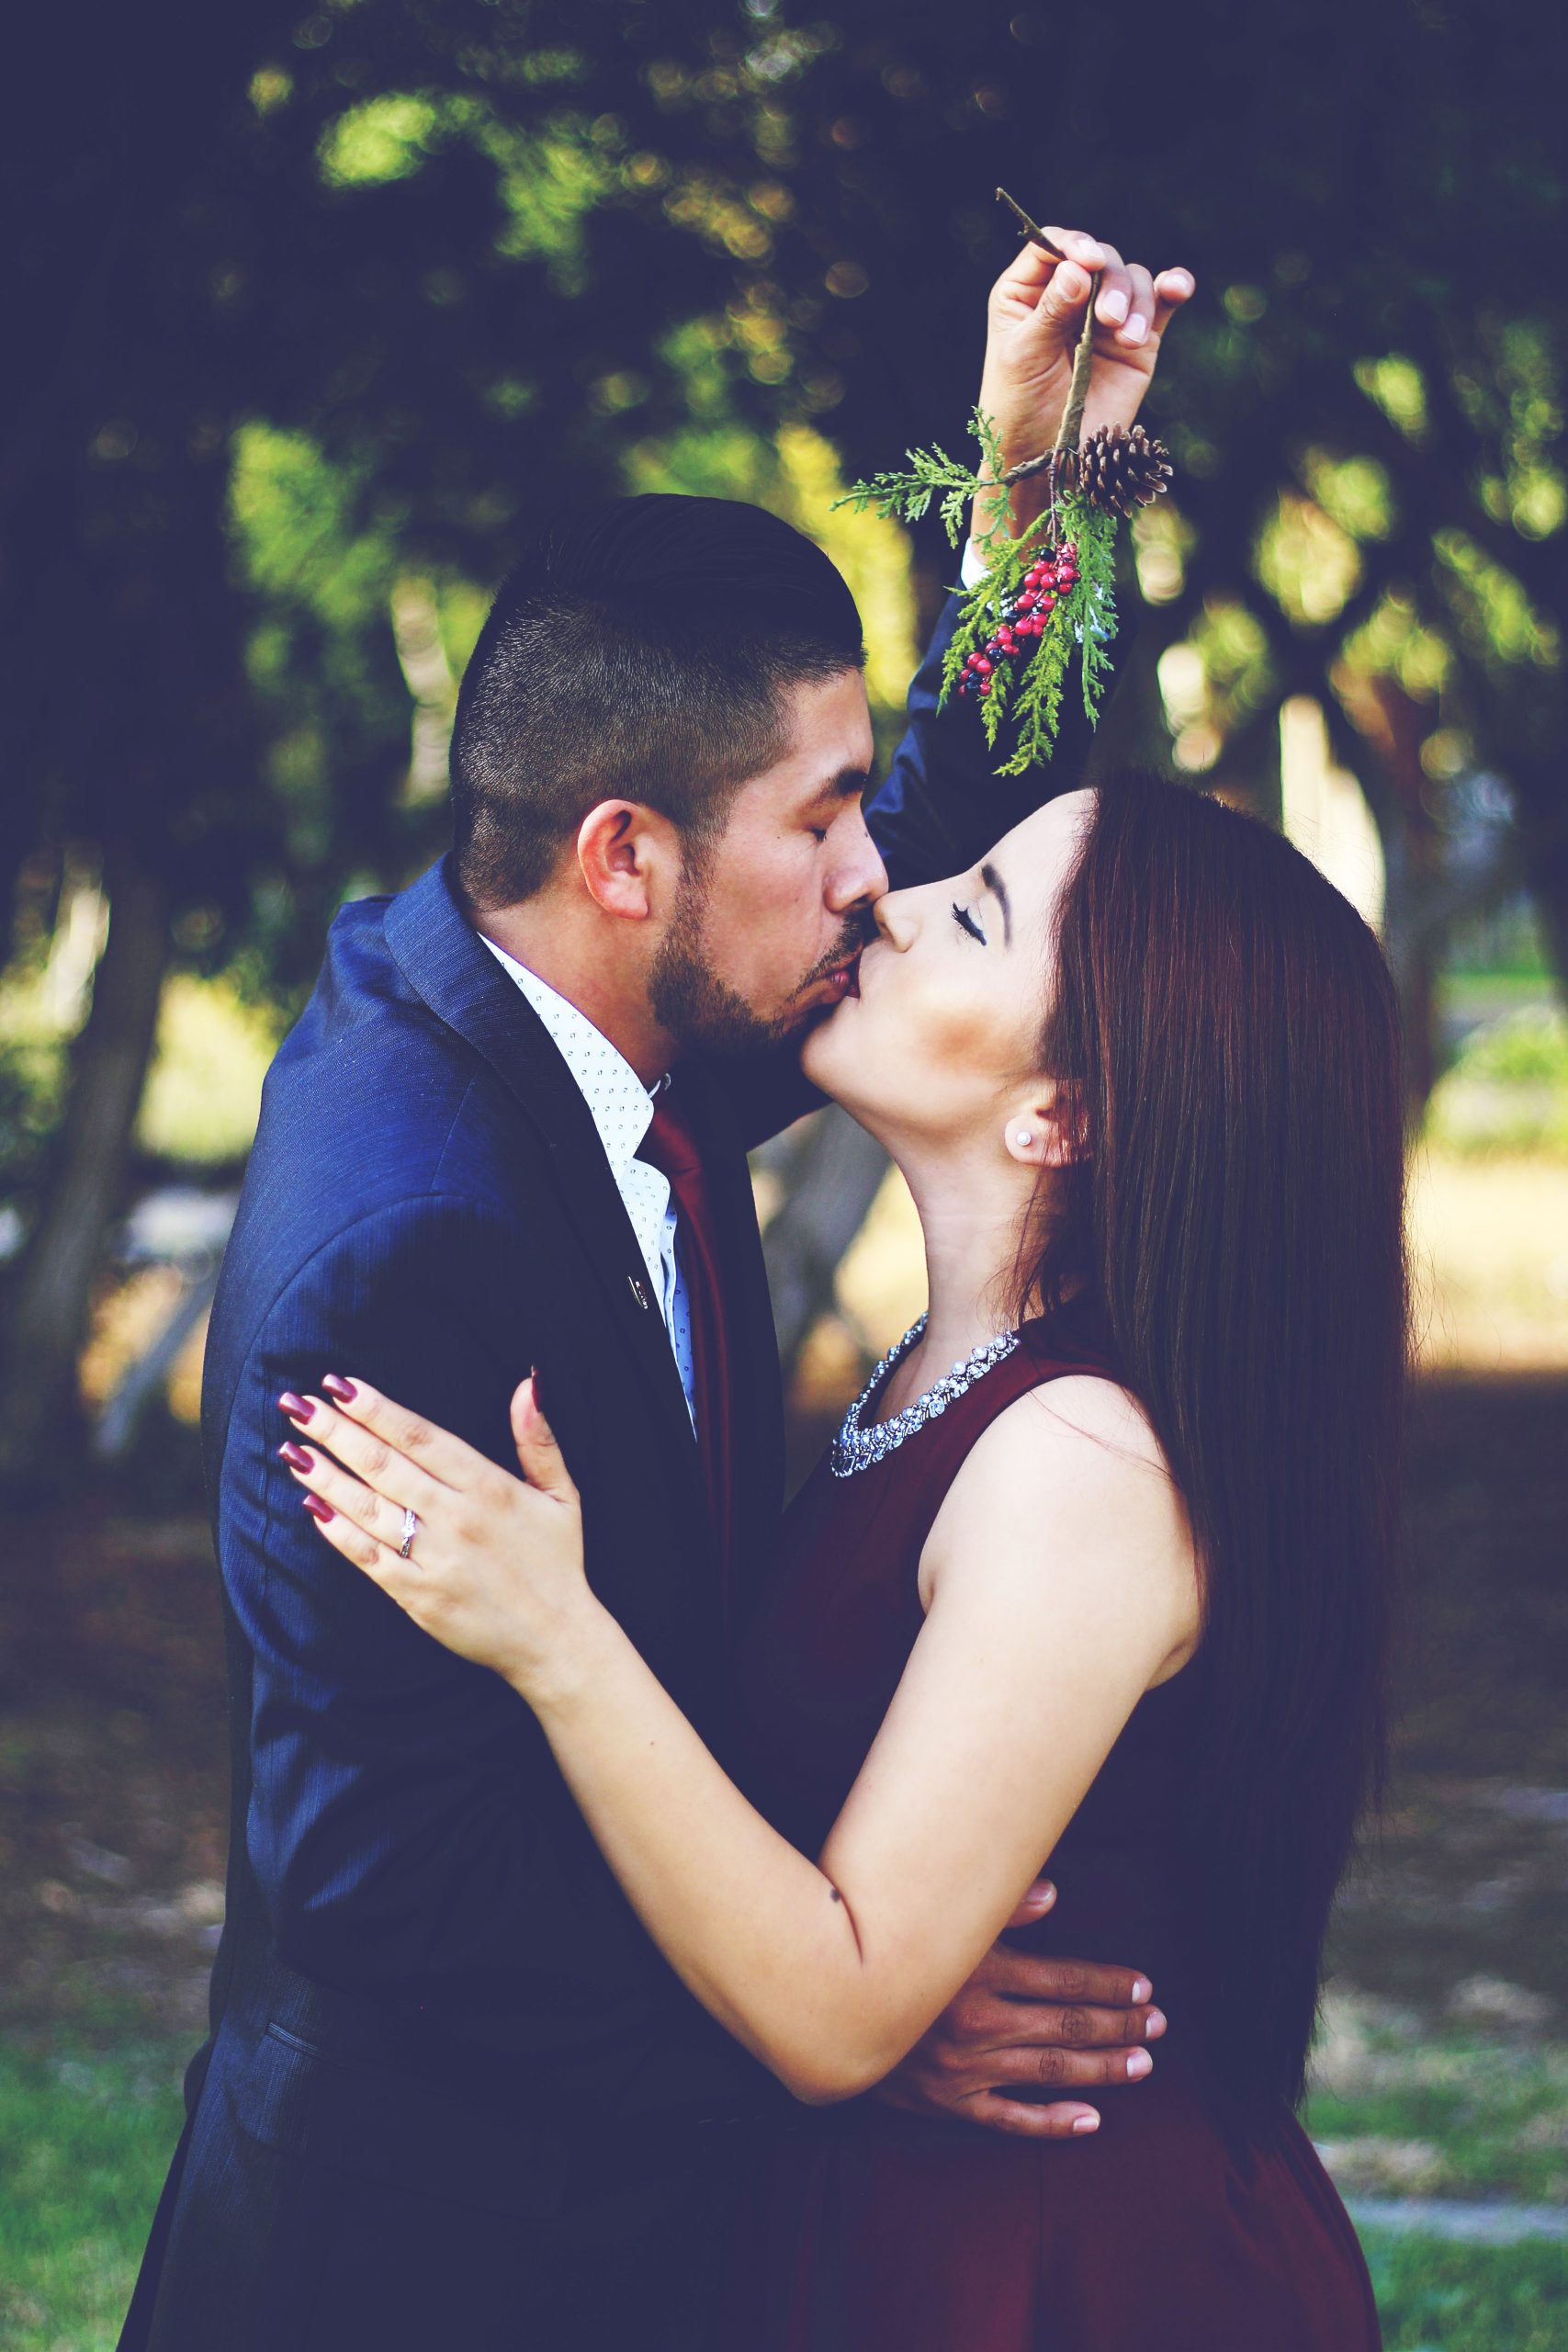 Couple kissing under mistletoe | My Eastern Shore Wedding